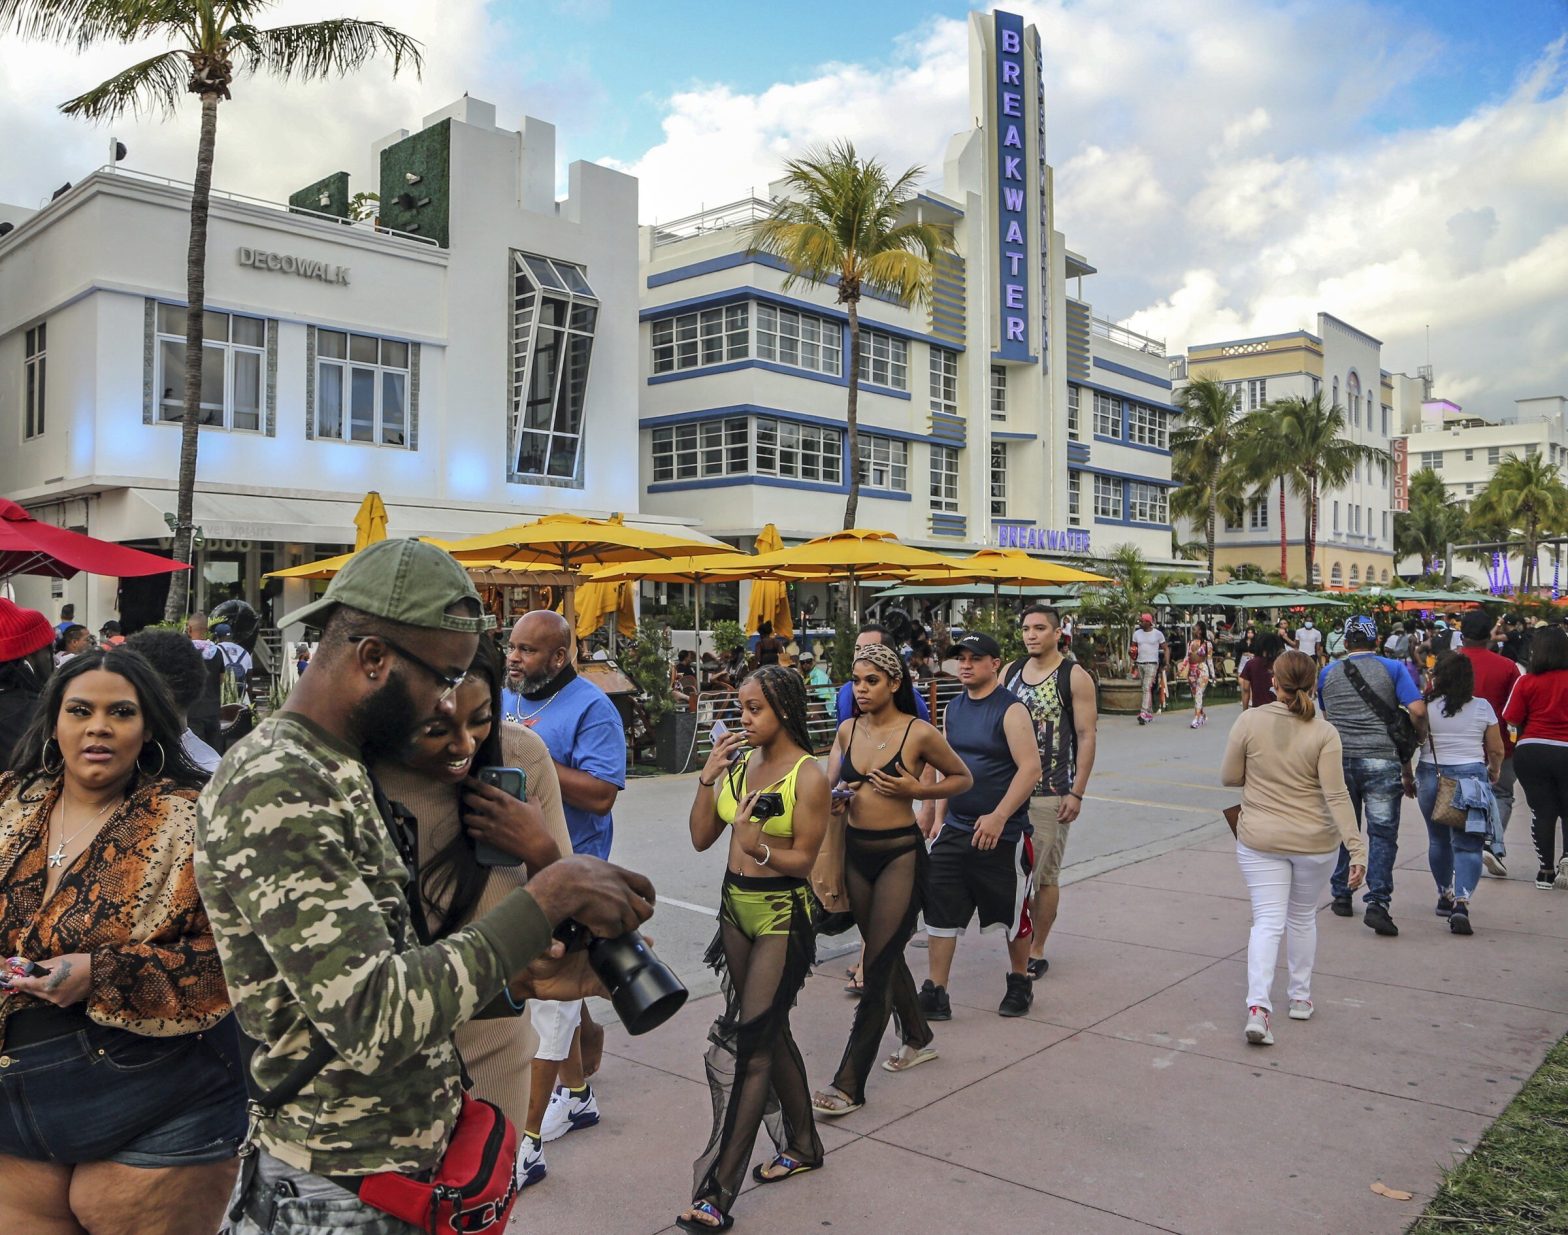 Miami Beach in State of Emergency as Spring Break Crowds Cluster